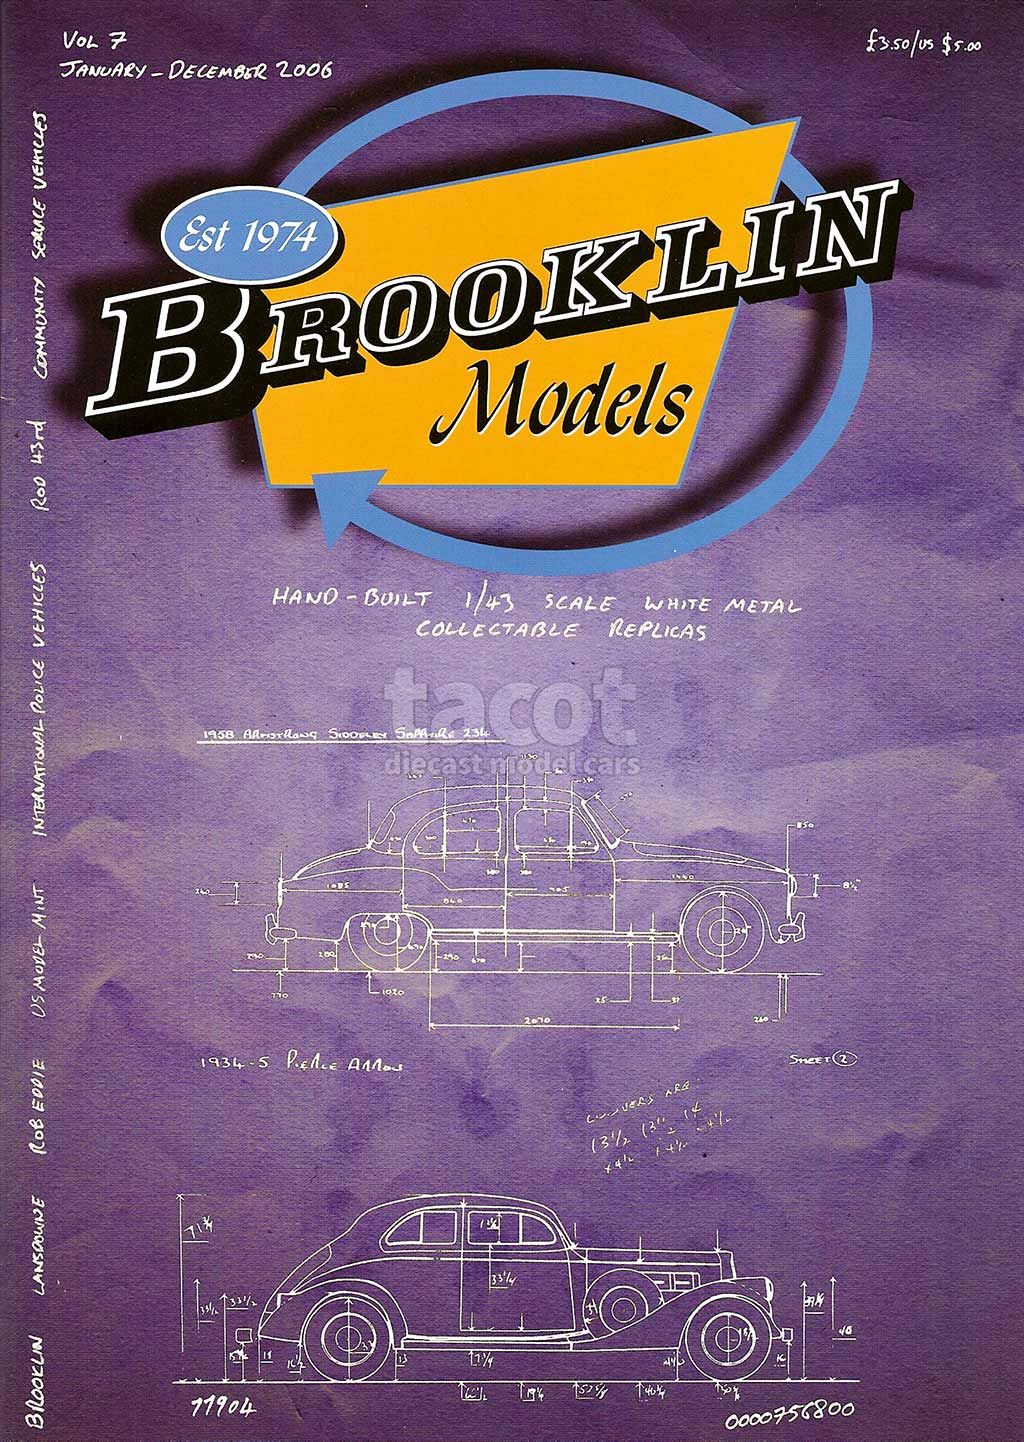 363 Catalogue Brooklin 2006